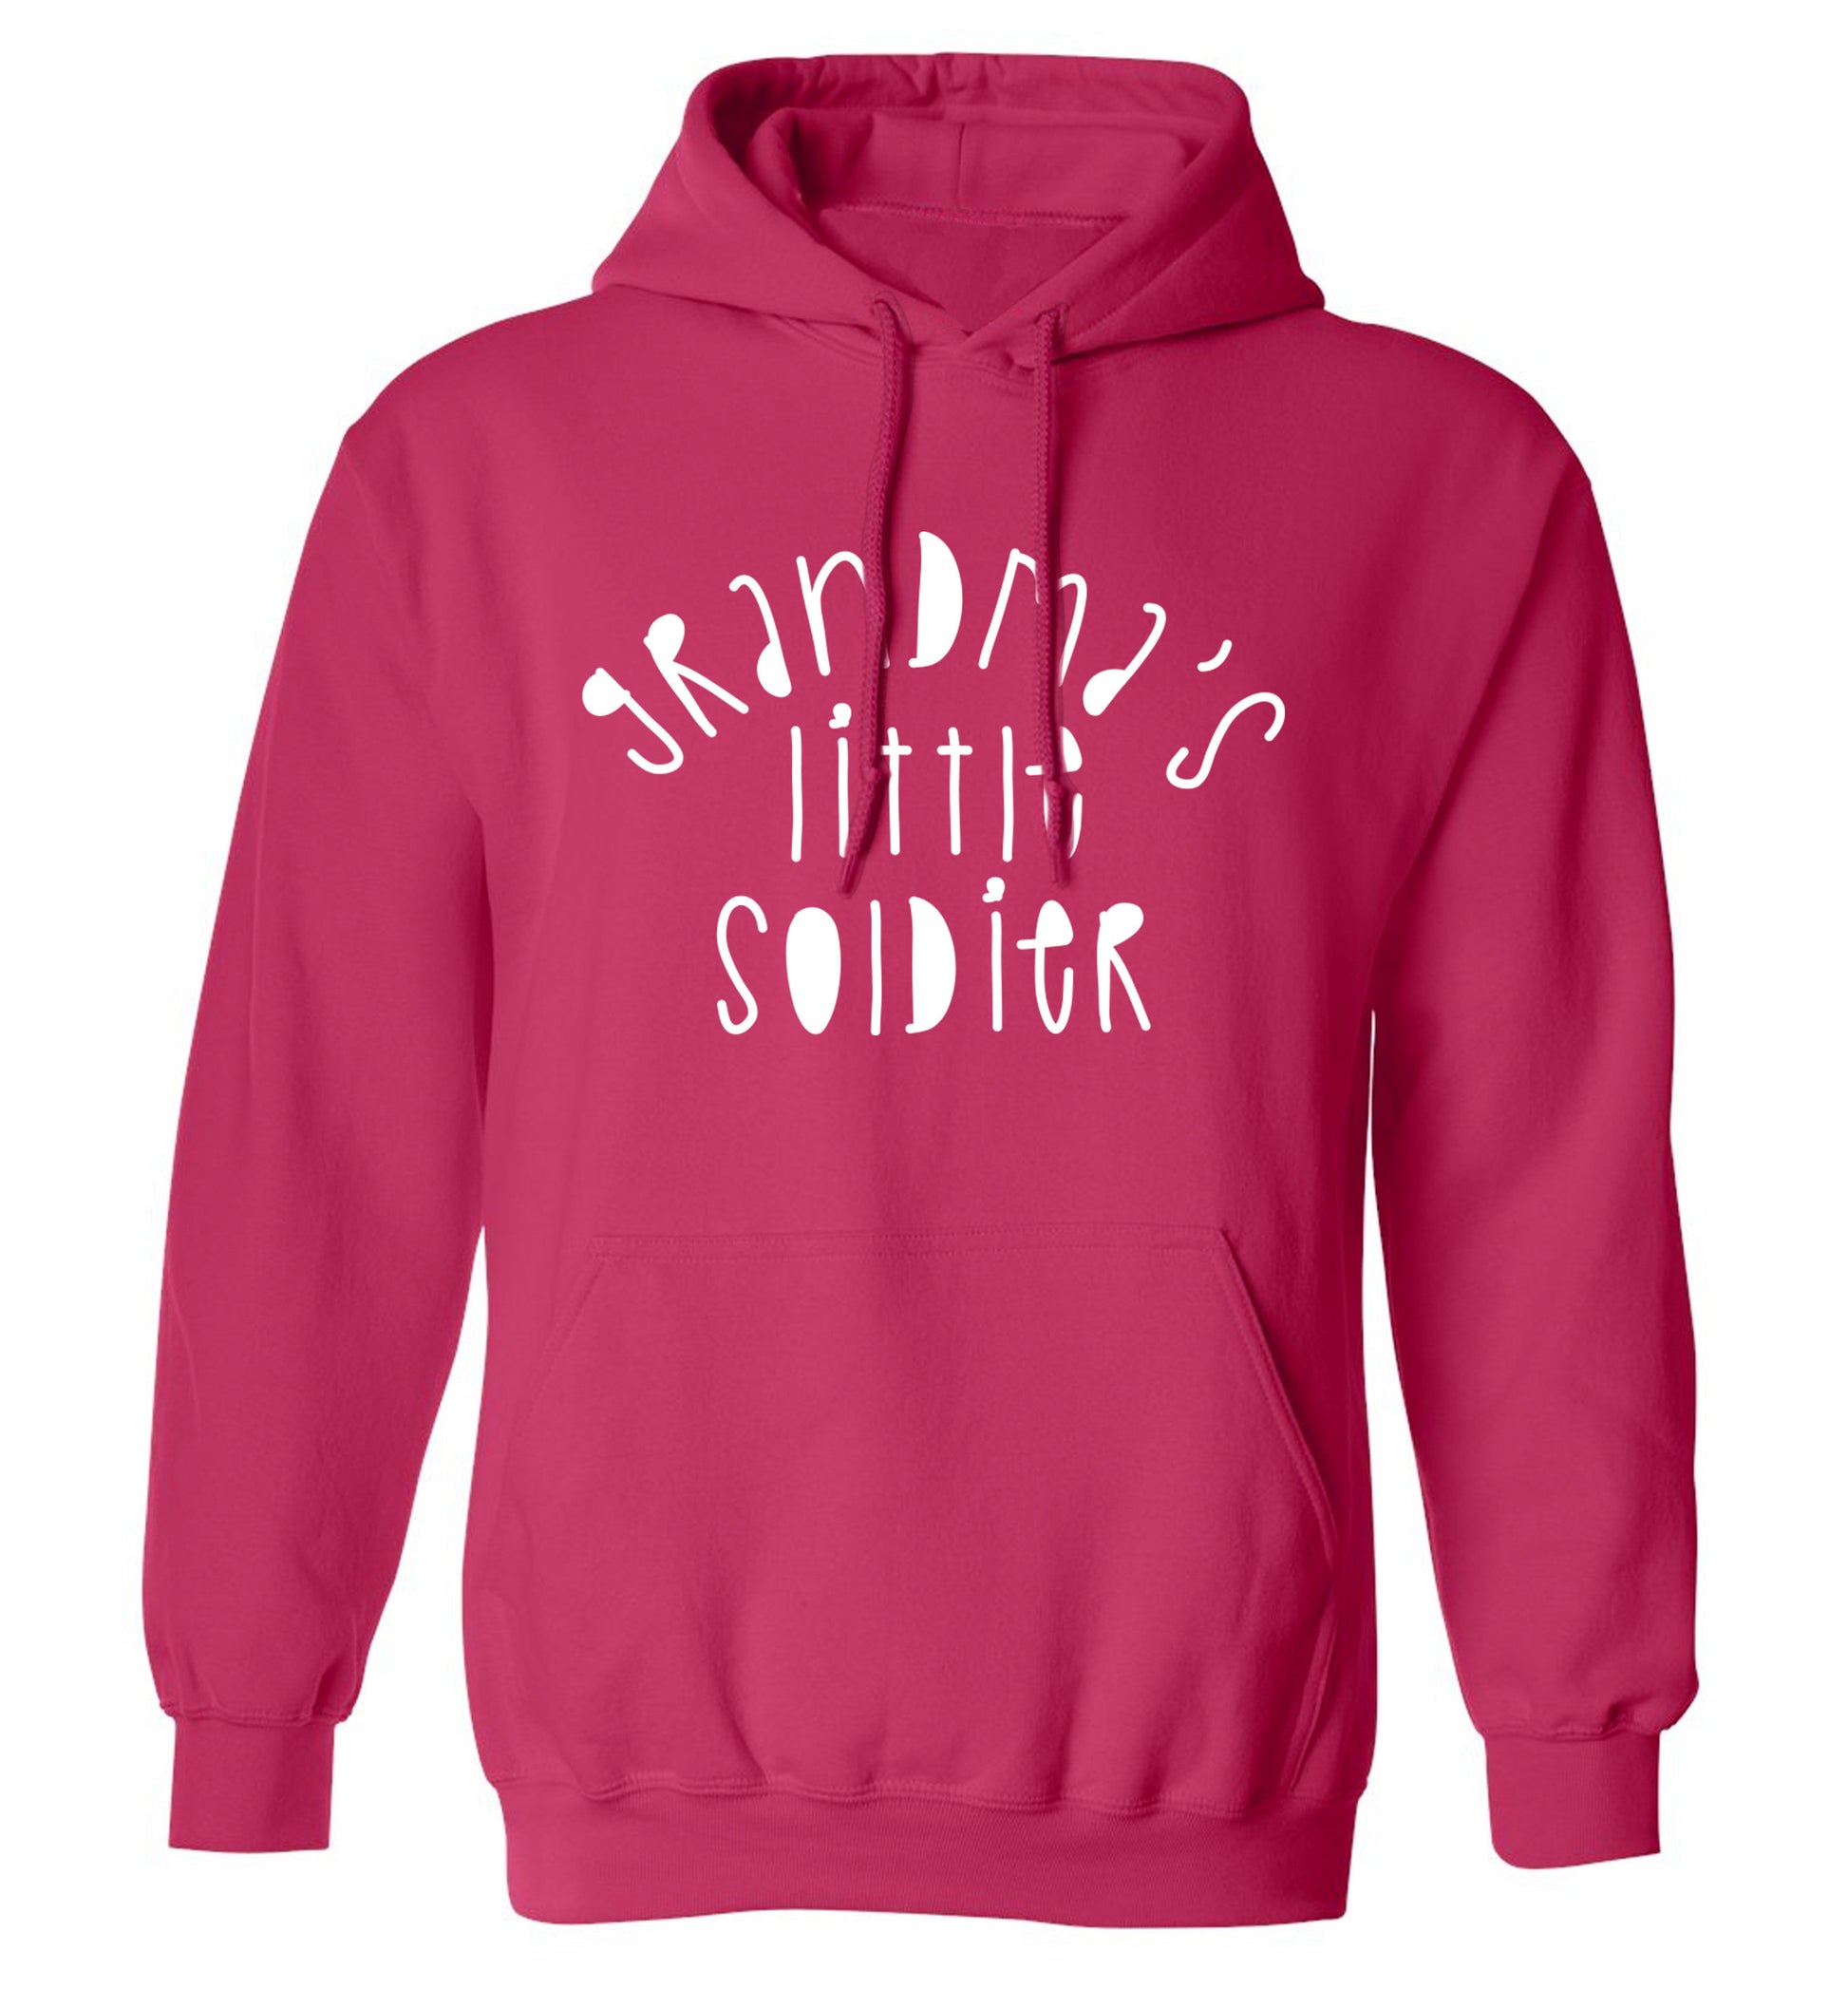 Grandma's little soldier adults unisex pink hoodie 2XL